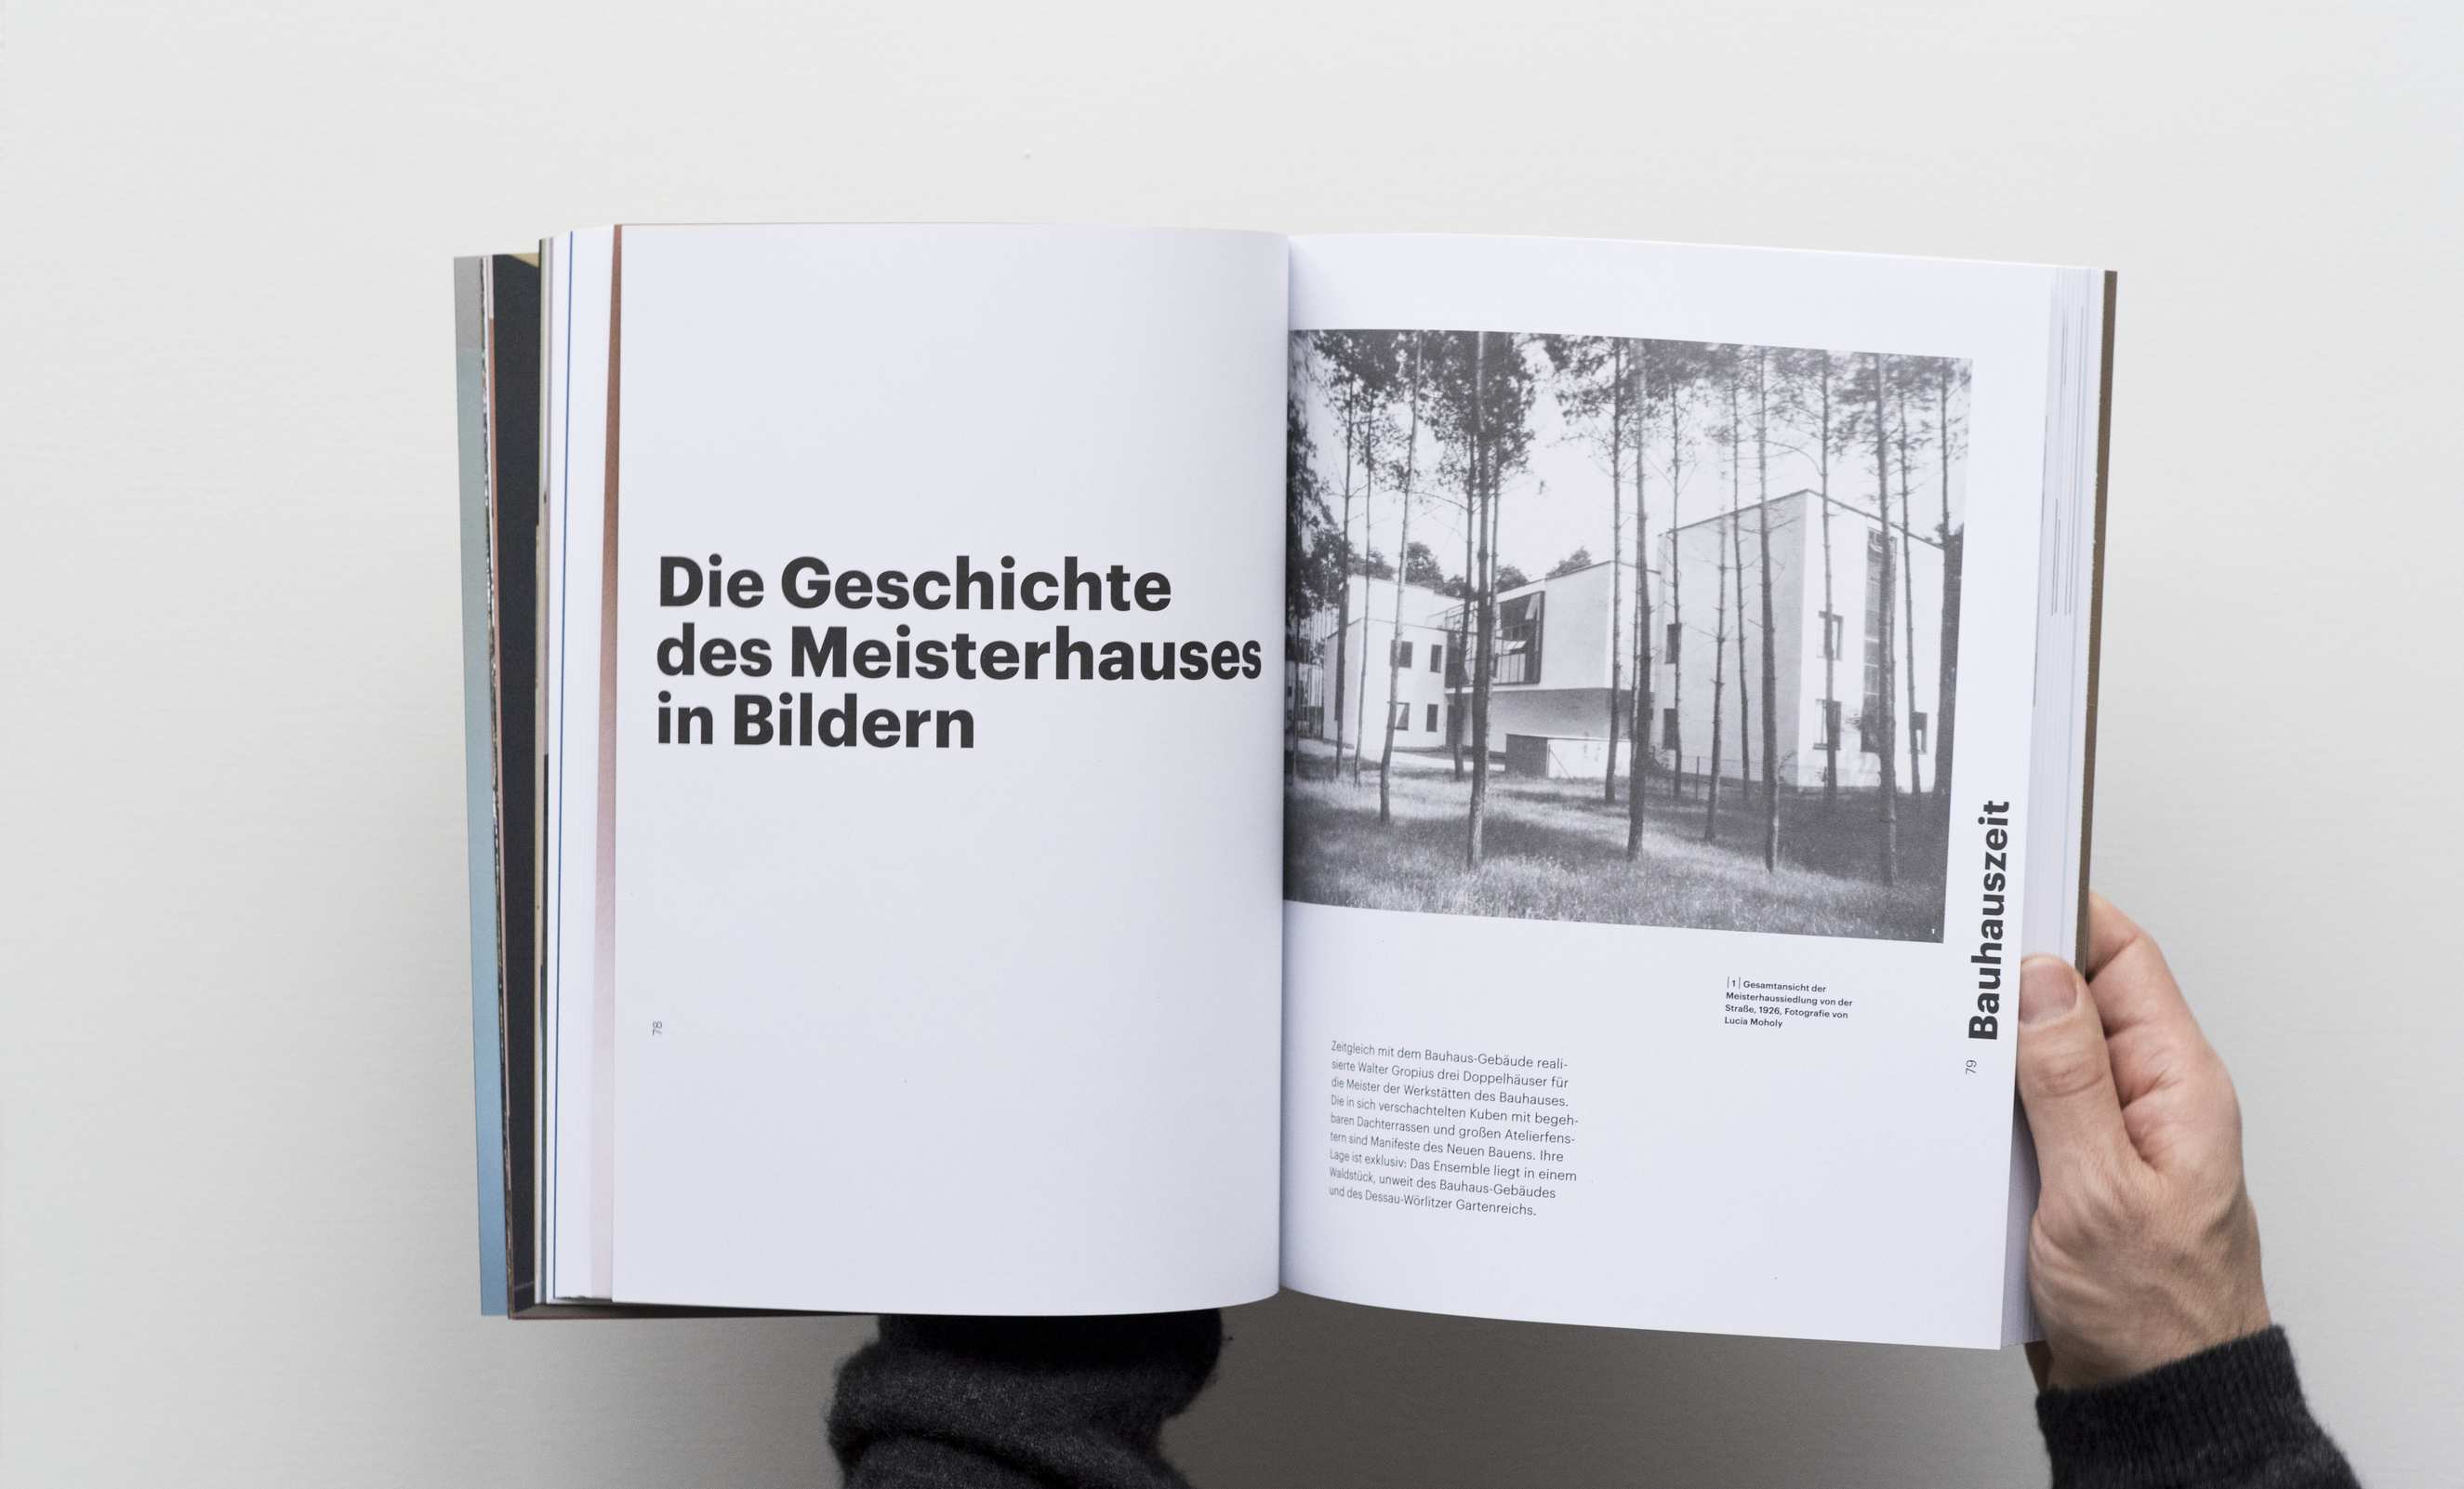 meisterhaus-kandinsky-klee-book-11-2650x1600px